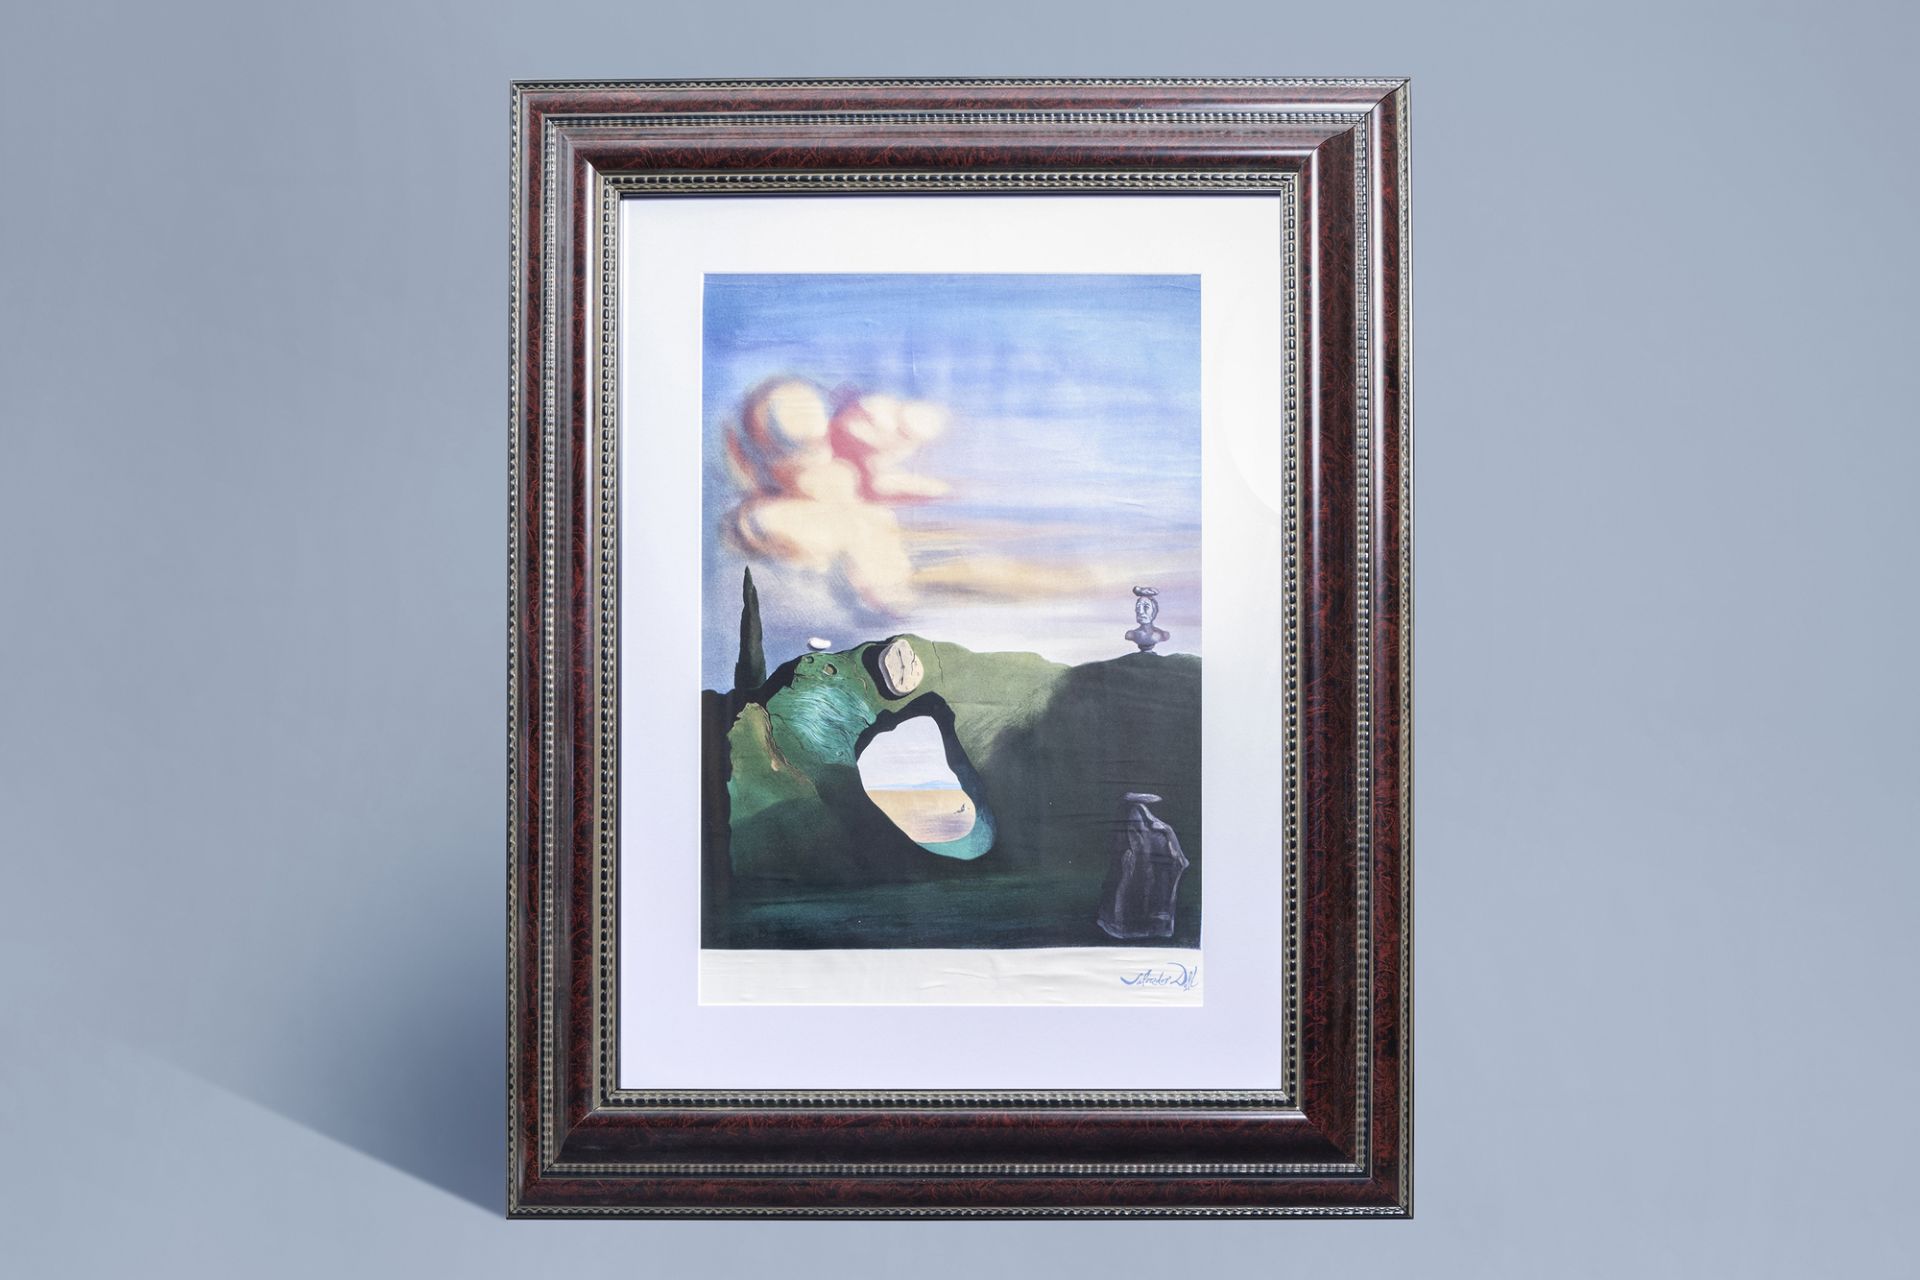 Salvador Dali (1904-1989, after): Untitled, print on silk, (1996) - Image 2 of 5